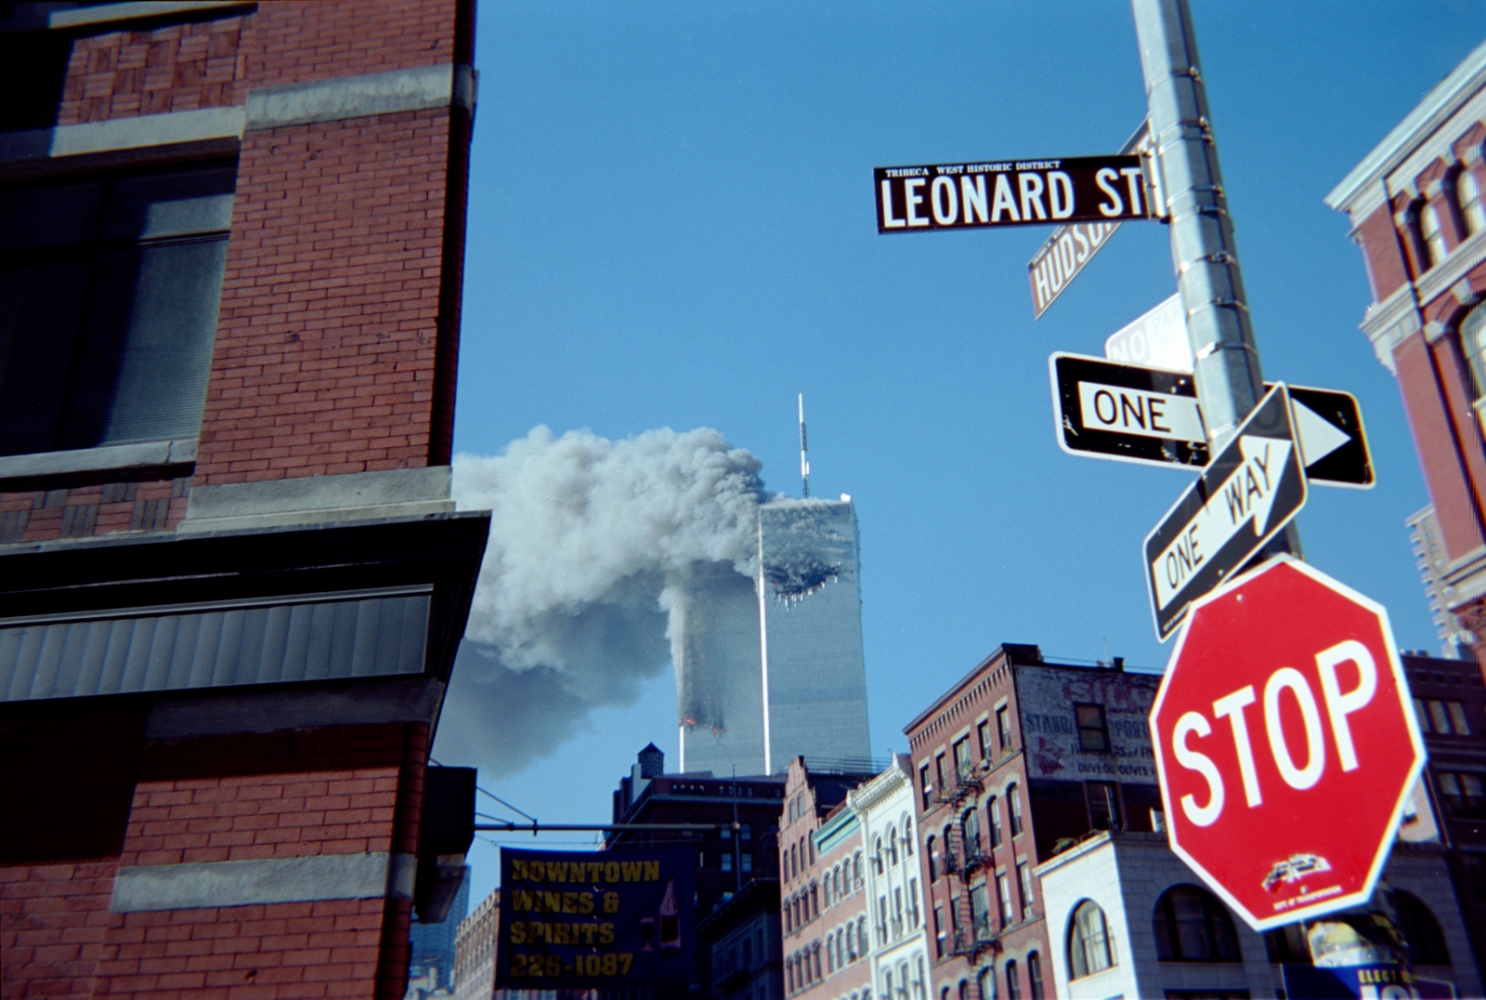 10013 Collection: 2012 - Leonard & Hudson Streets, 9.11.2001